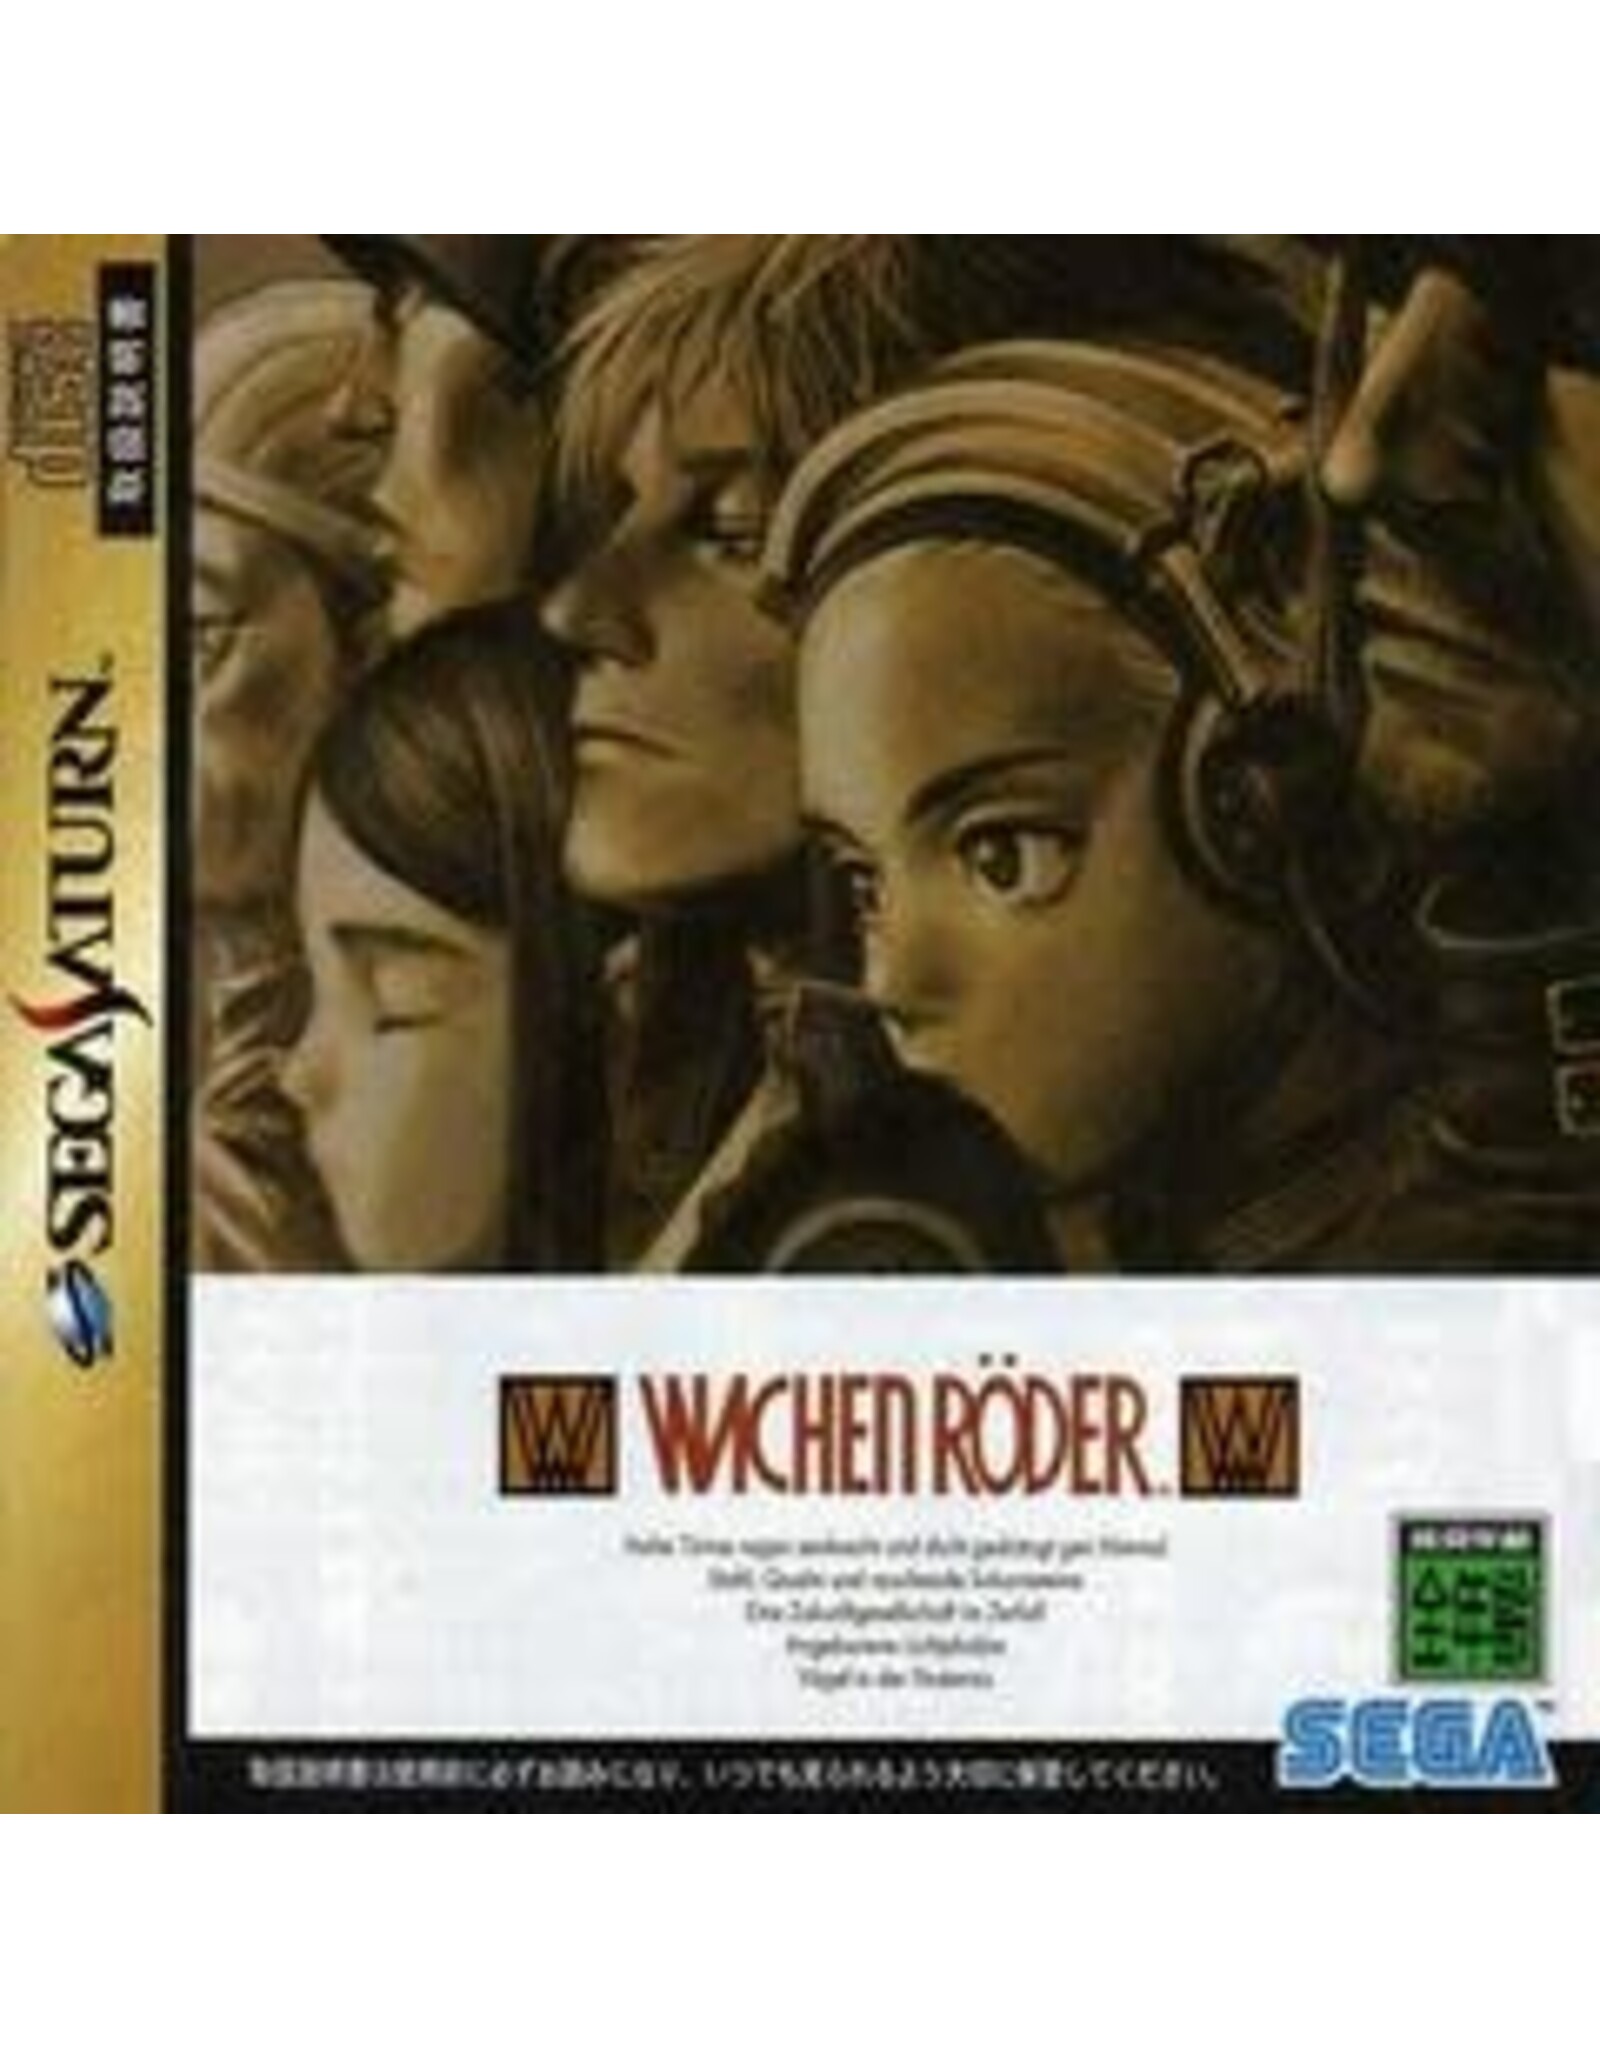 Sega Saturn Wachenroder - JP Import (Used)